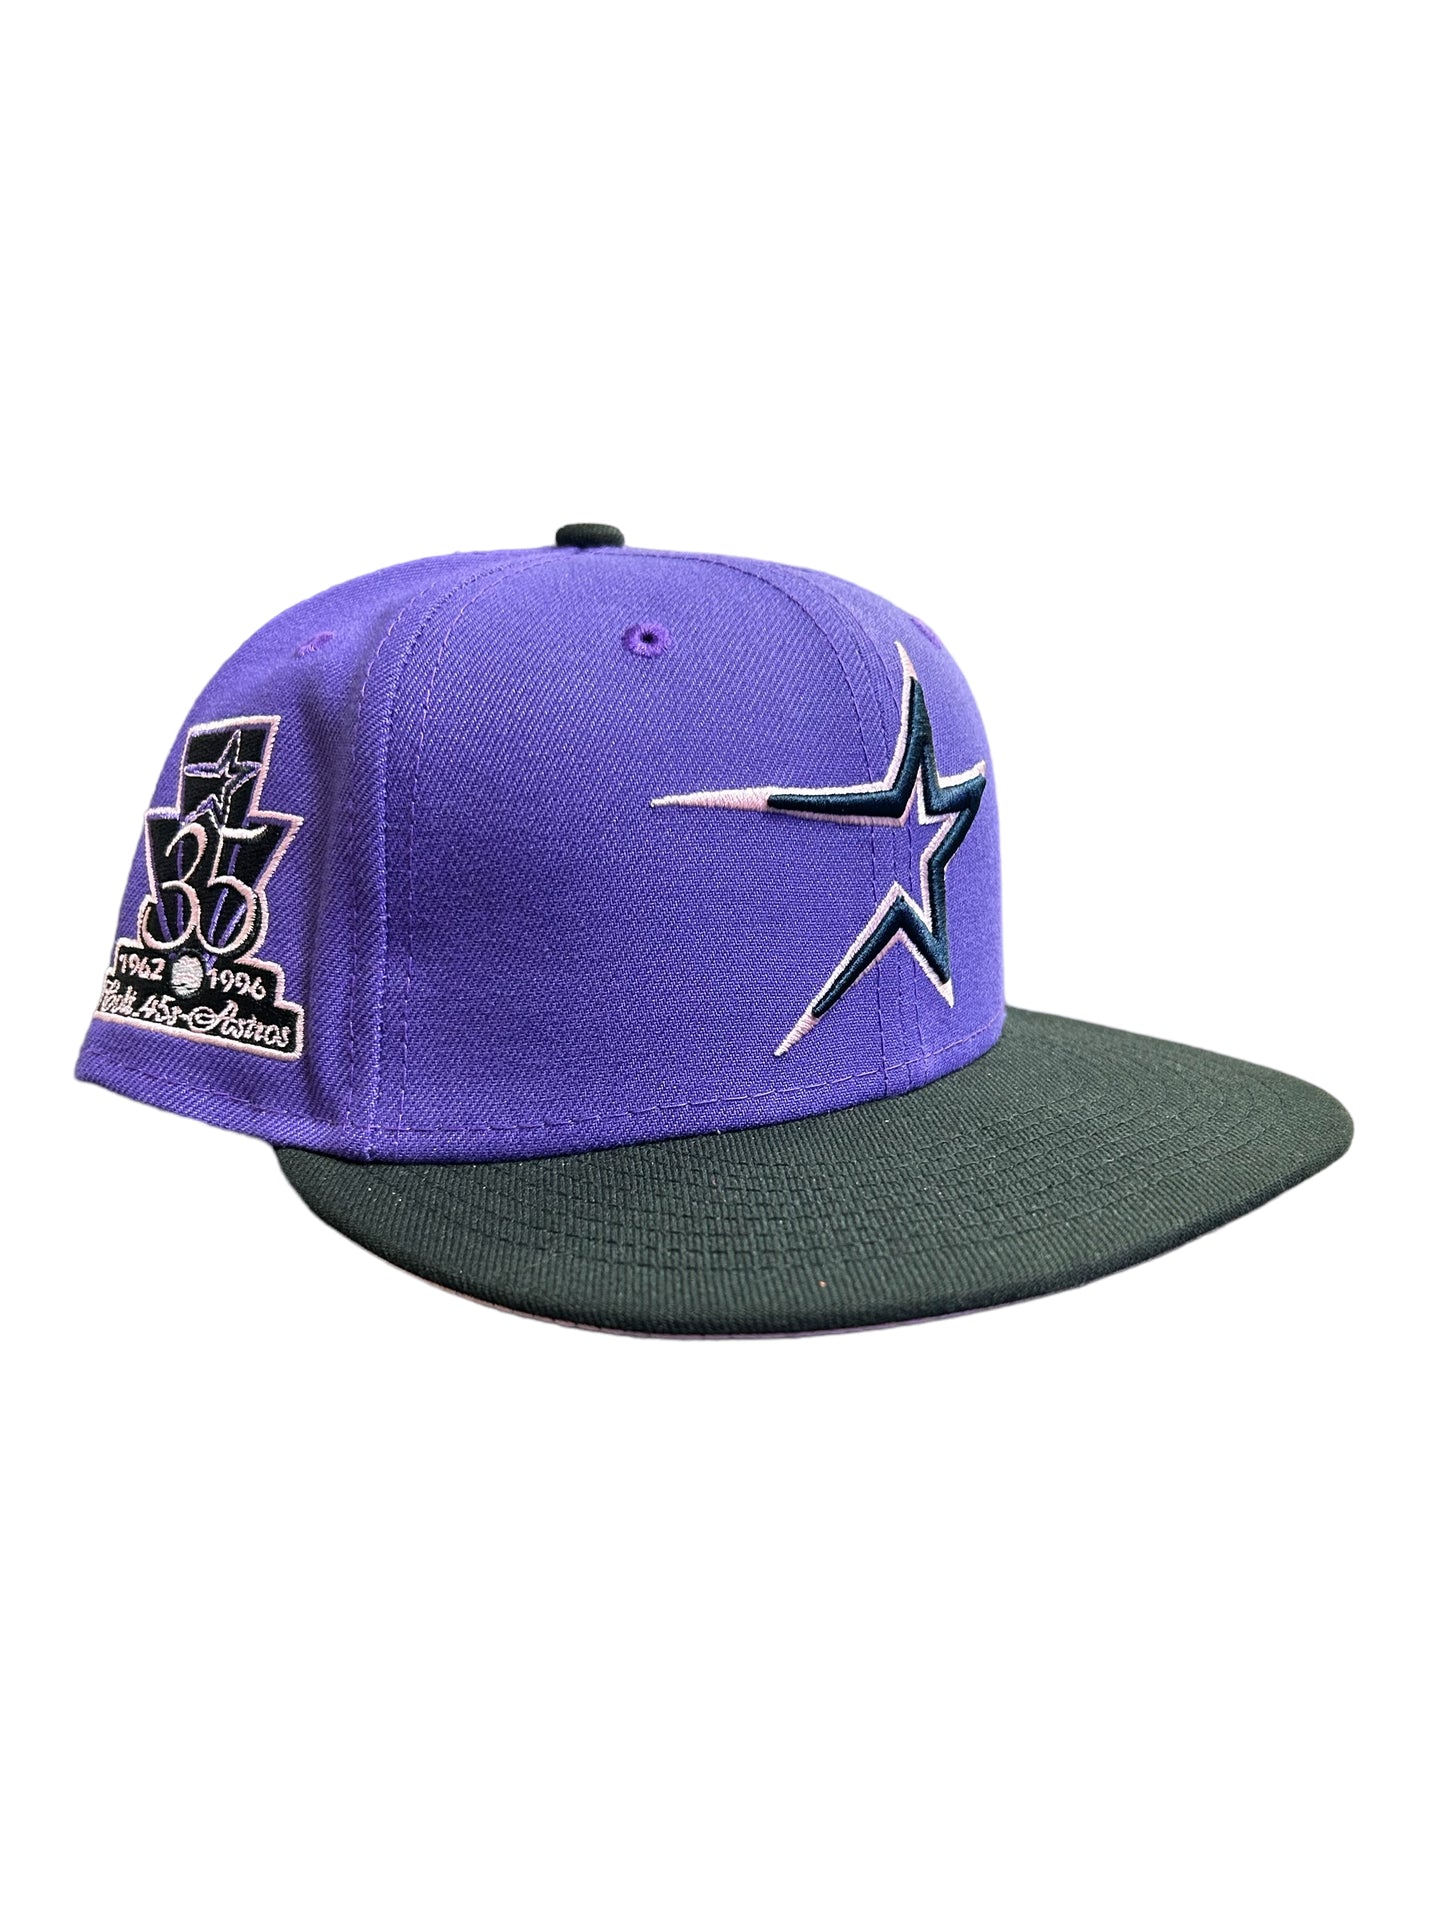 Houston Astros Purple/Black Hat